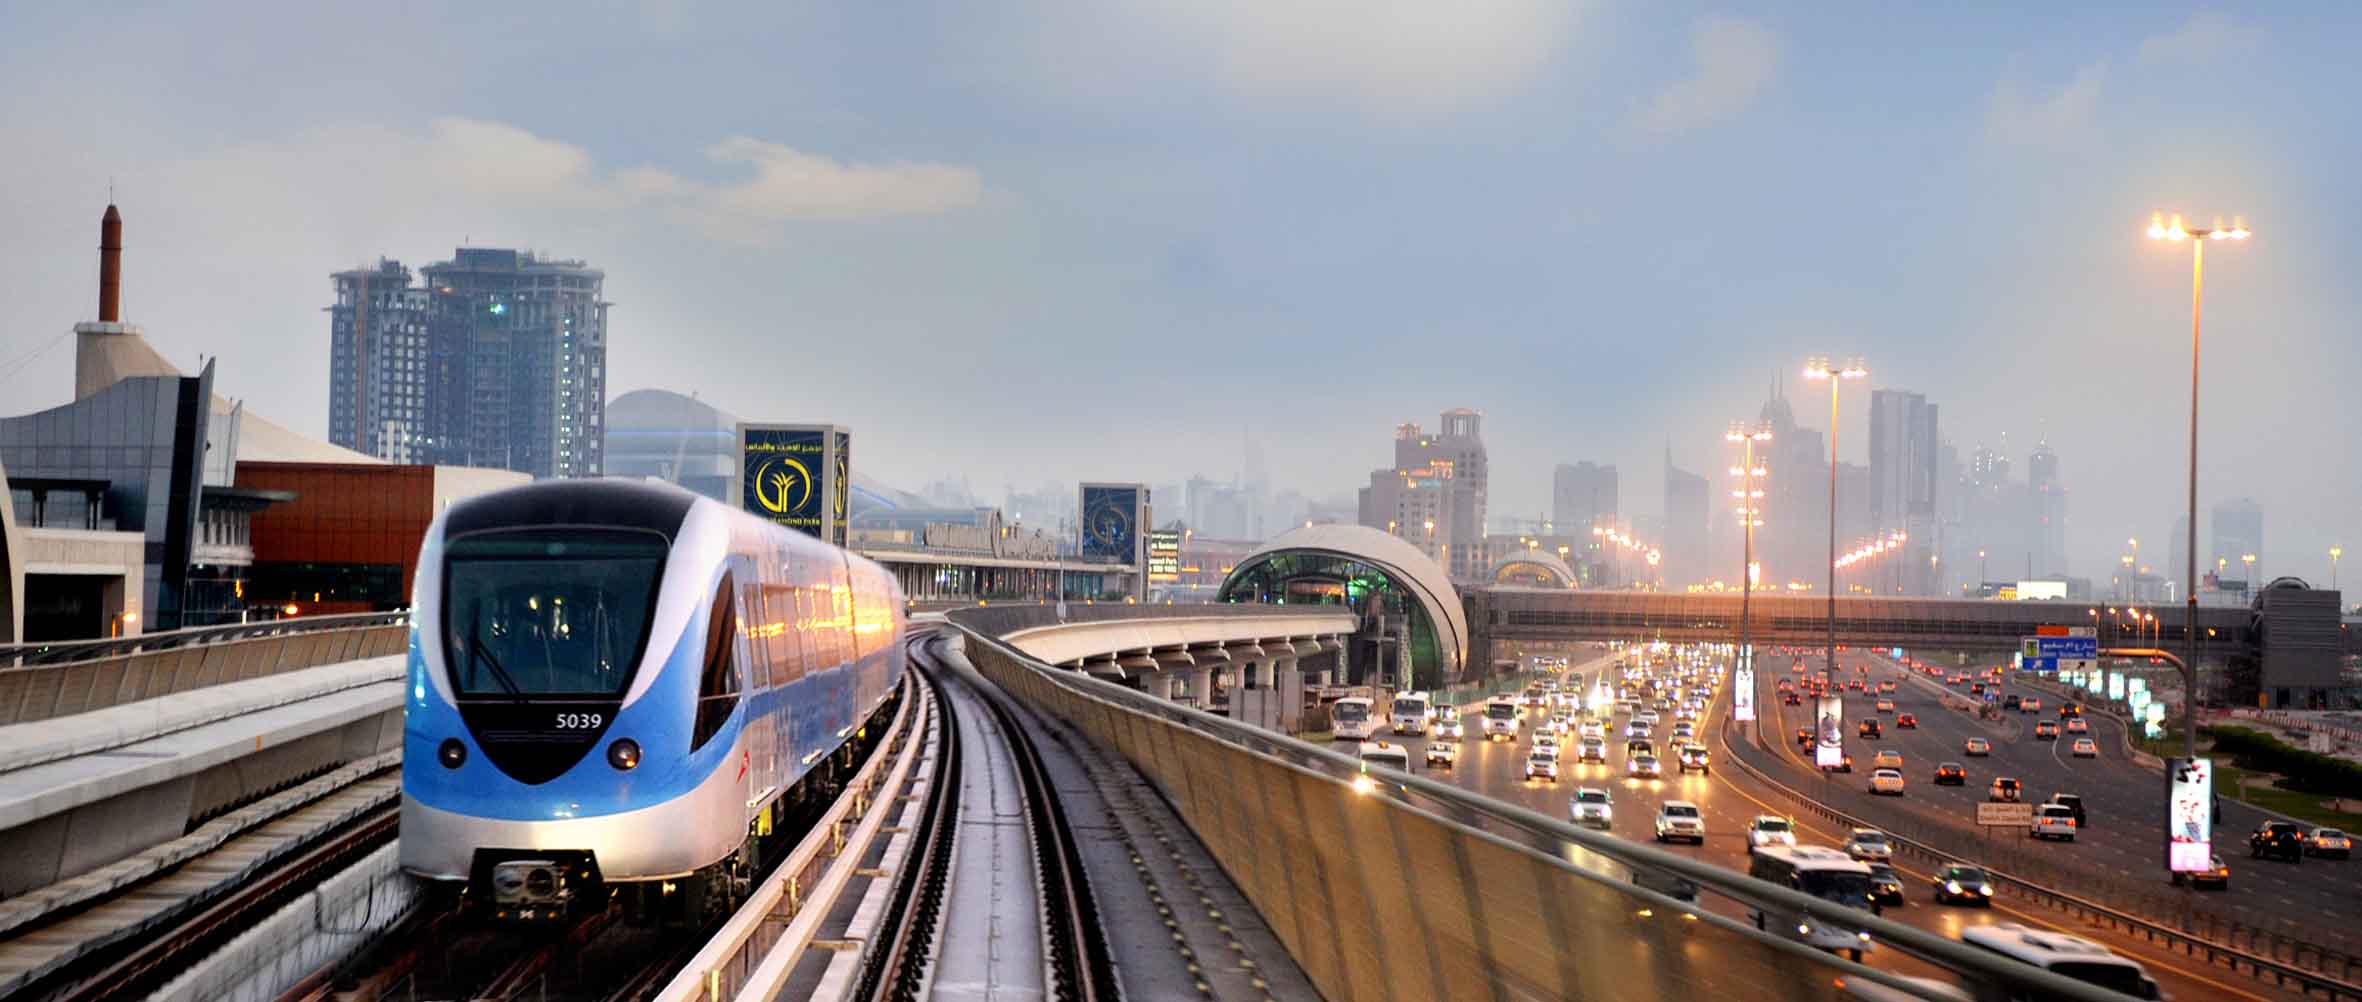 صورة محطات مترو دبي والاماكن القريبه منها